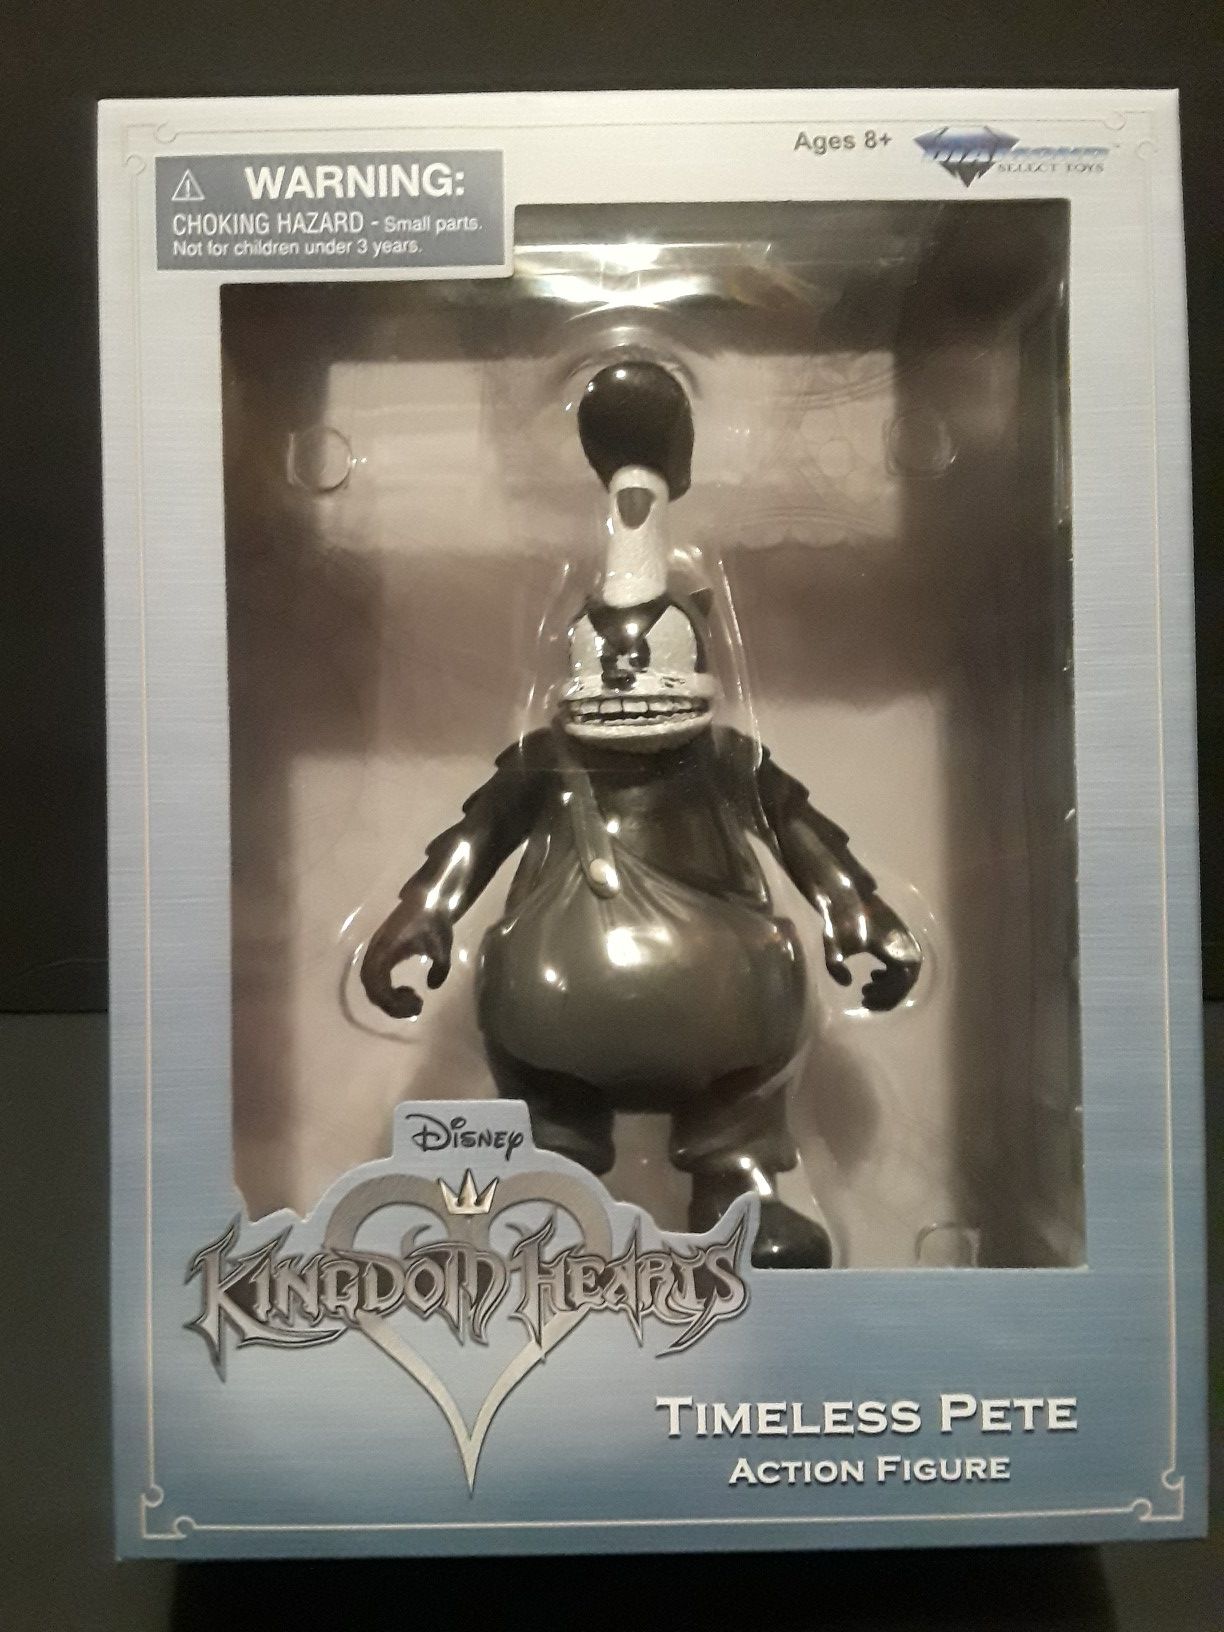 Disney Kingdom Hearts Timeless Pete action figure.